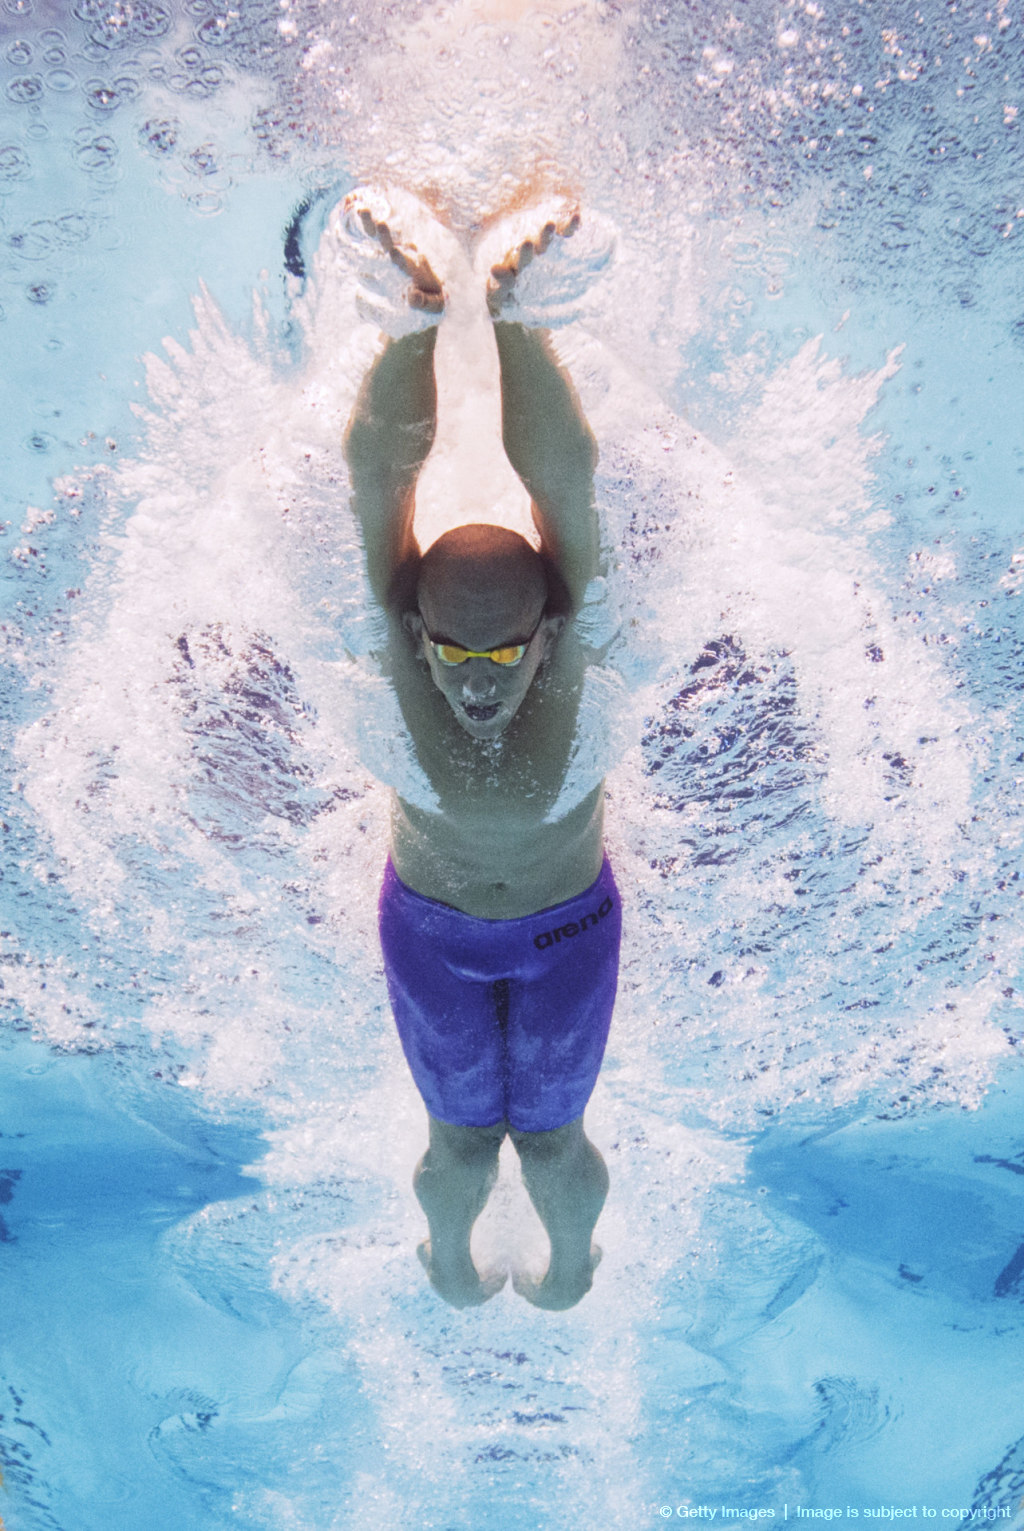 Swimming — 16th FINA World Championships: Day Twelve